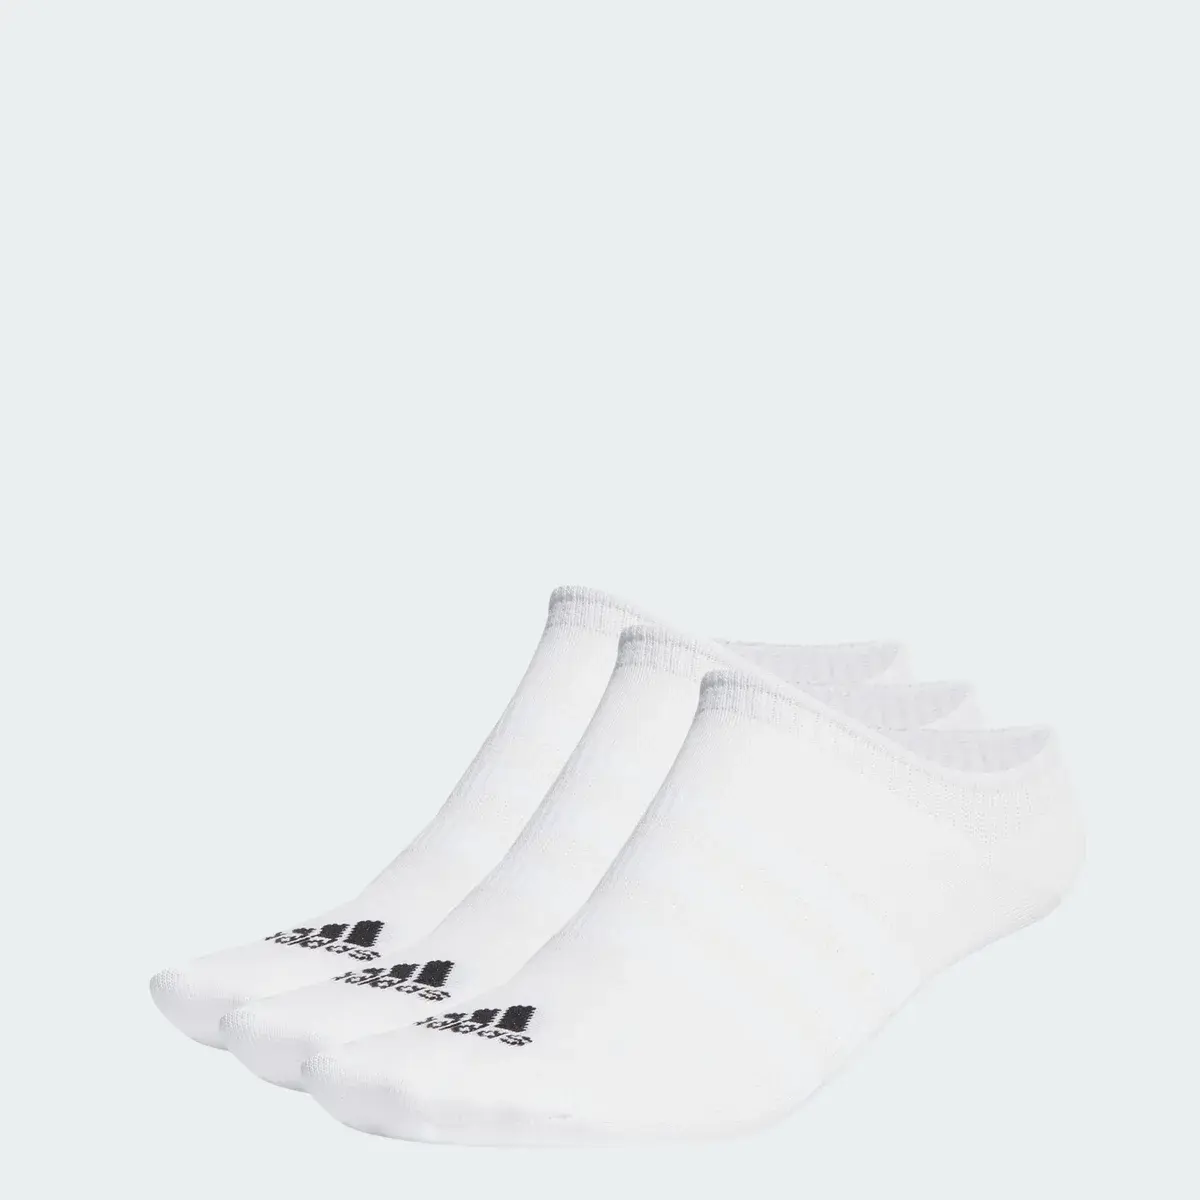 Adidas Thin and Light No-Show Socks 3 Pairs. 2